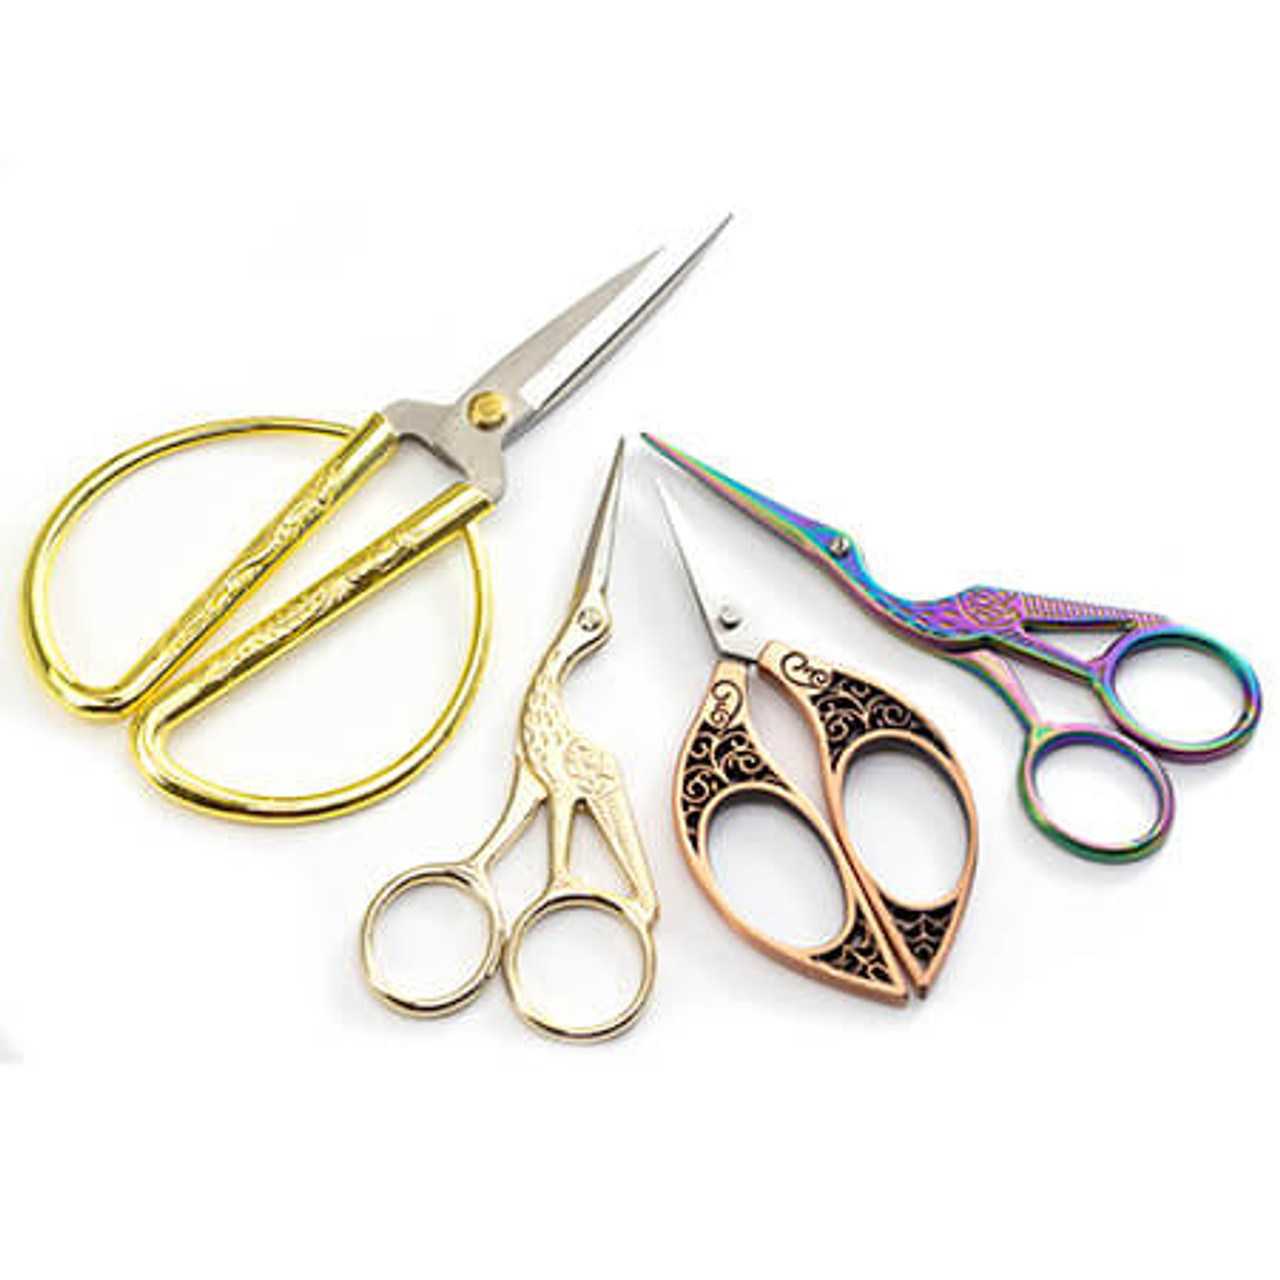 4.25 Lady Liberty Embroidery Scissors, Tres Chic Stitchery #S105